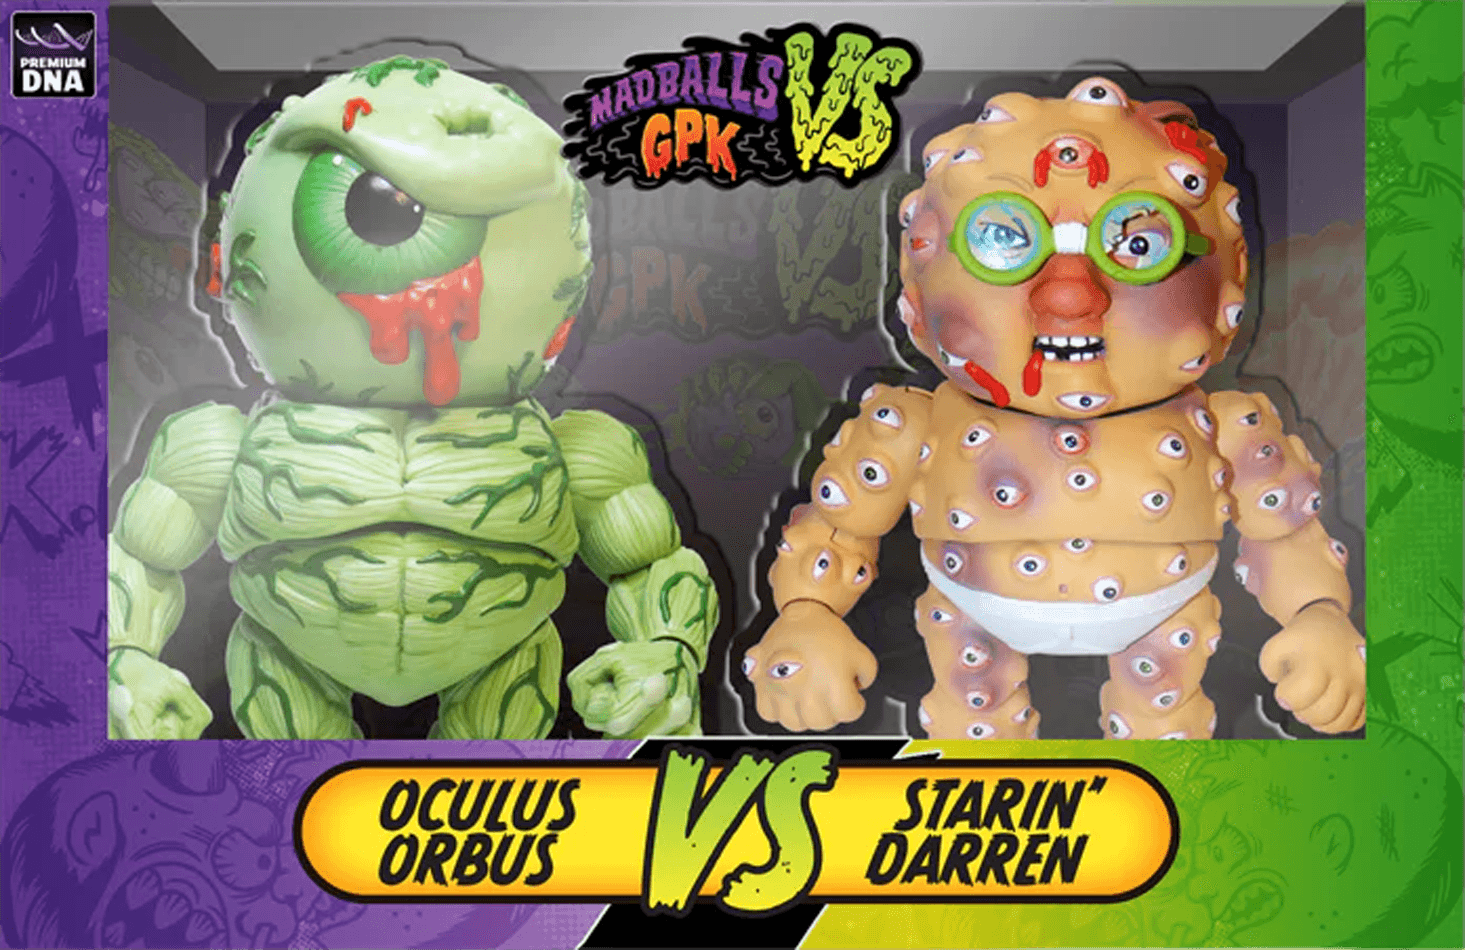 DNAPDNAMBVGPKSDVOO Madballs vs GPK - Starin' Darren vs Oculus Orbus Action Figure Set - Premium DNA Toys - Titan Pop Culture